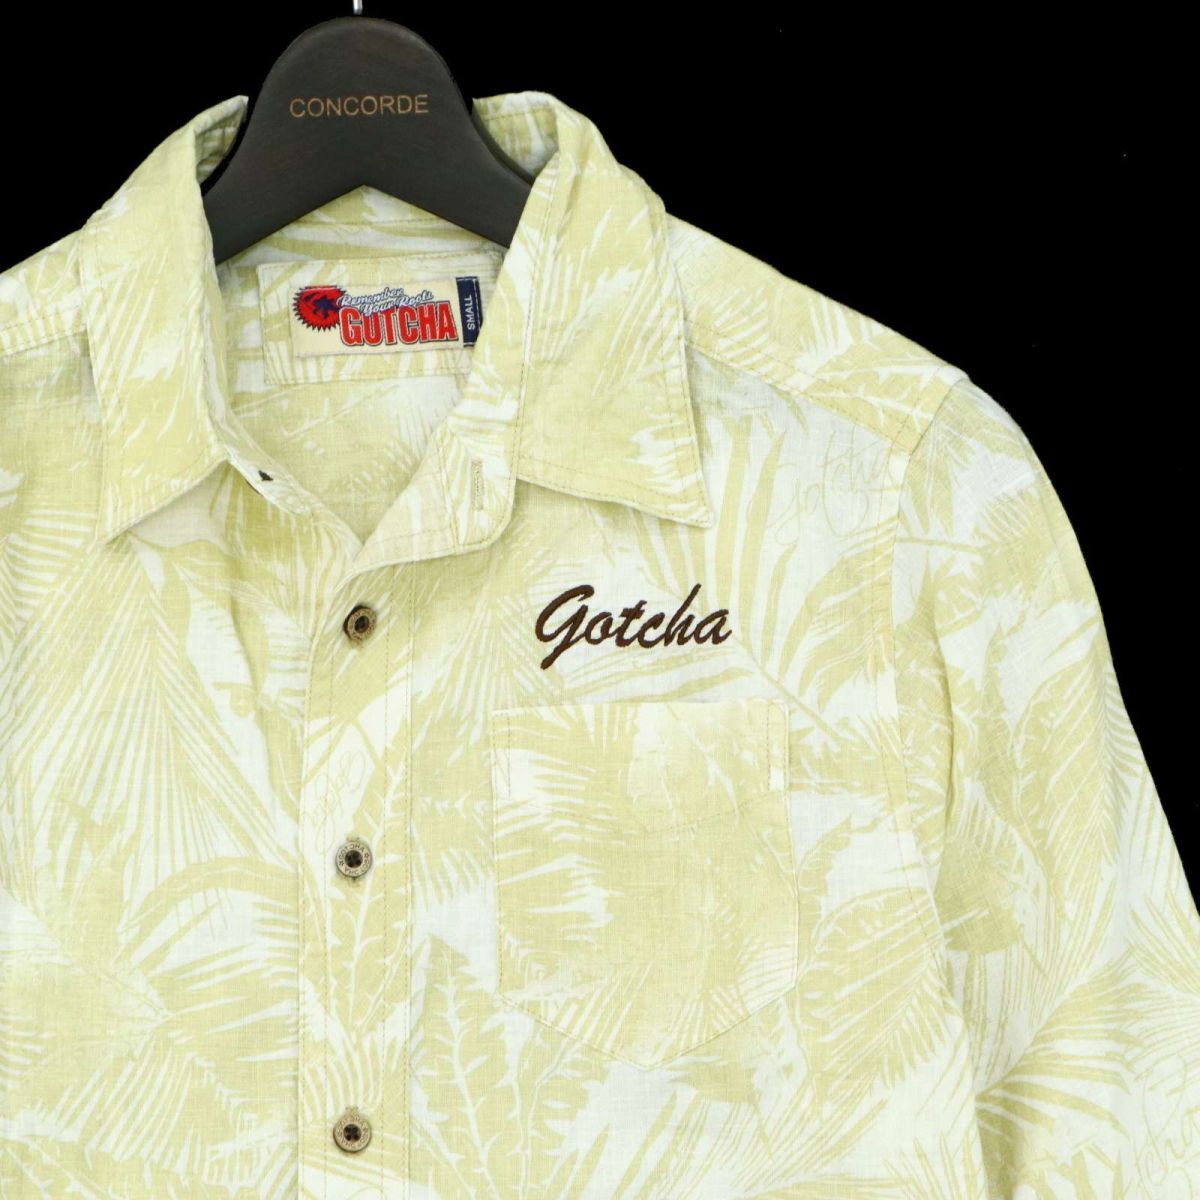 GOTCHA Gotcha весна лето длинный рукав Logo вышивка * [ лен *linen]botanikaru leaf общий рисунок рубашка Sz.S мужской Surf C2T08068_8#A